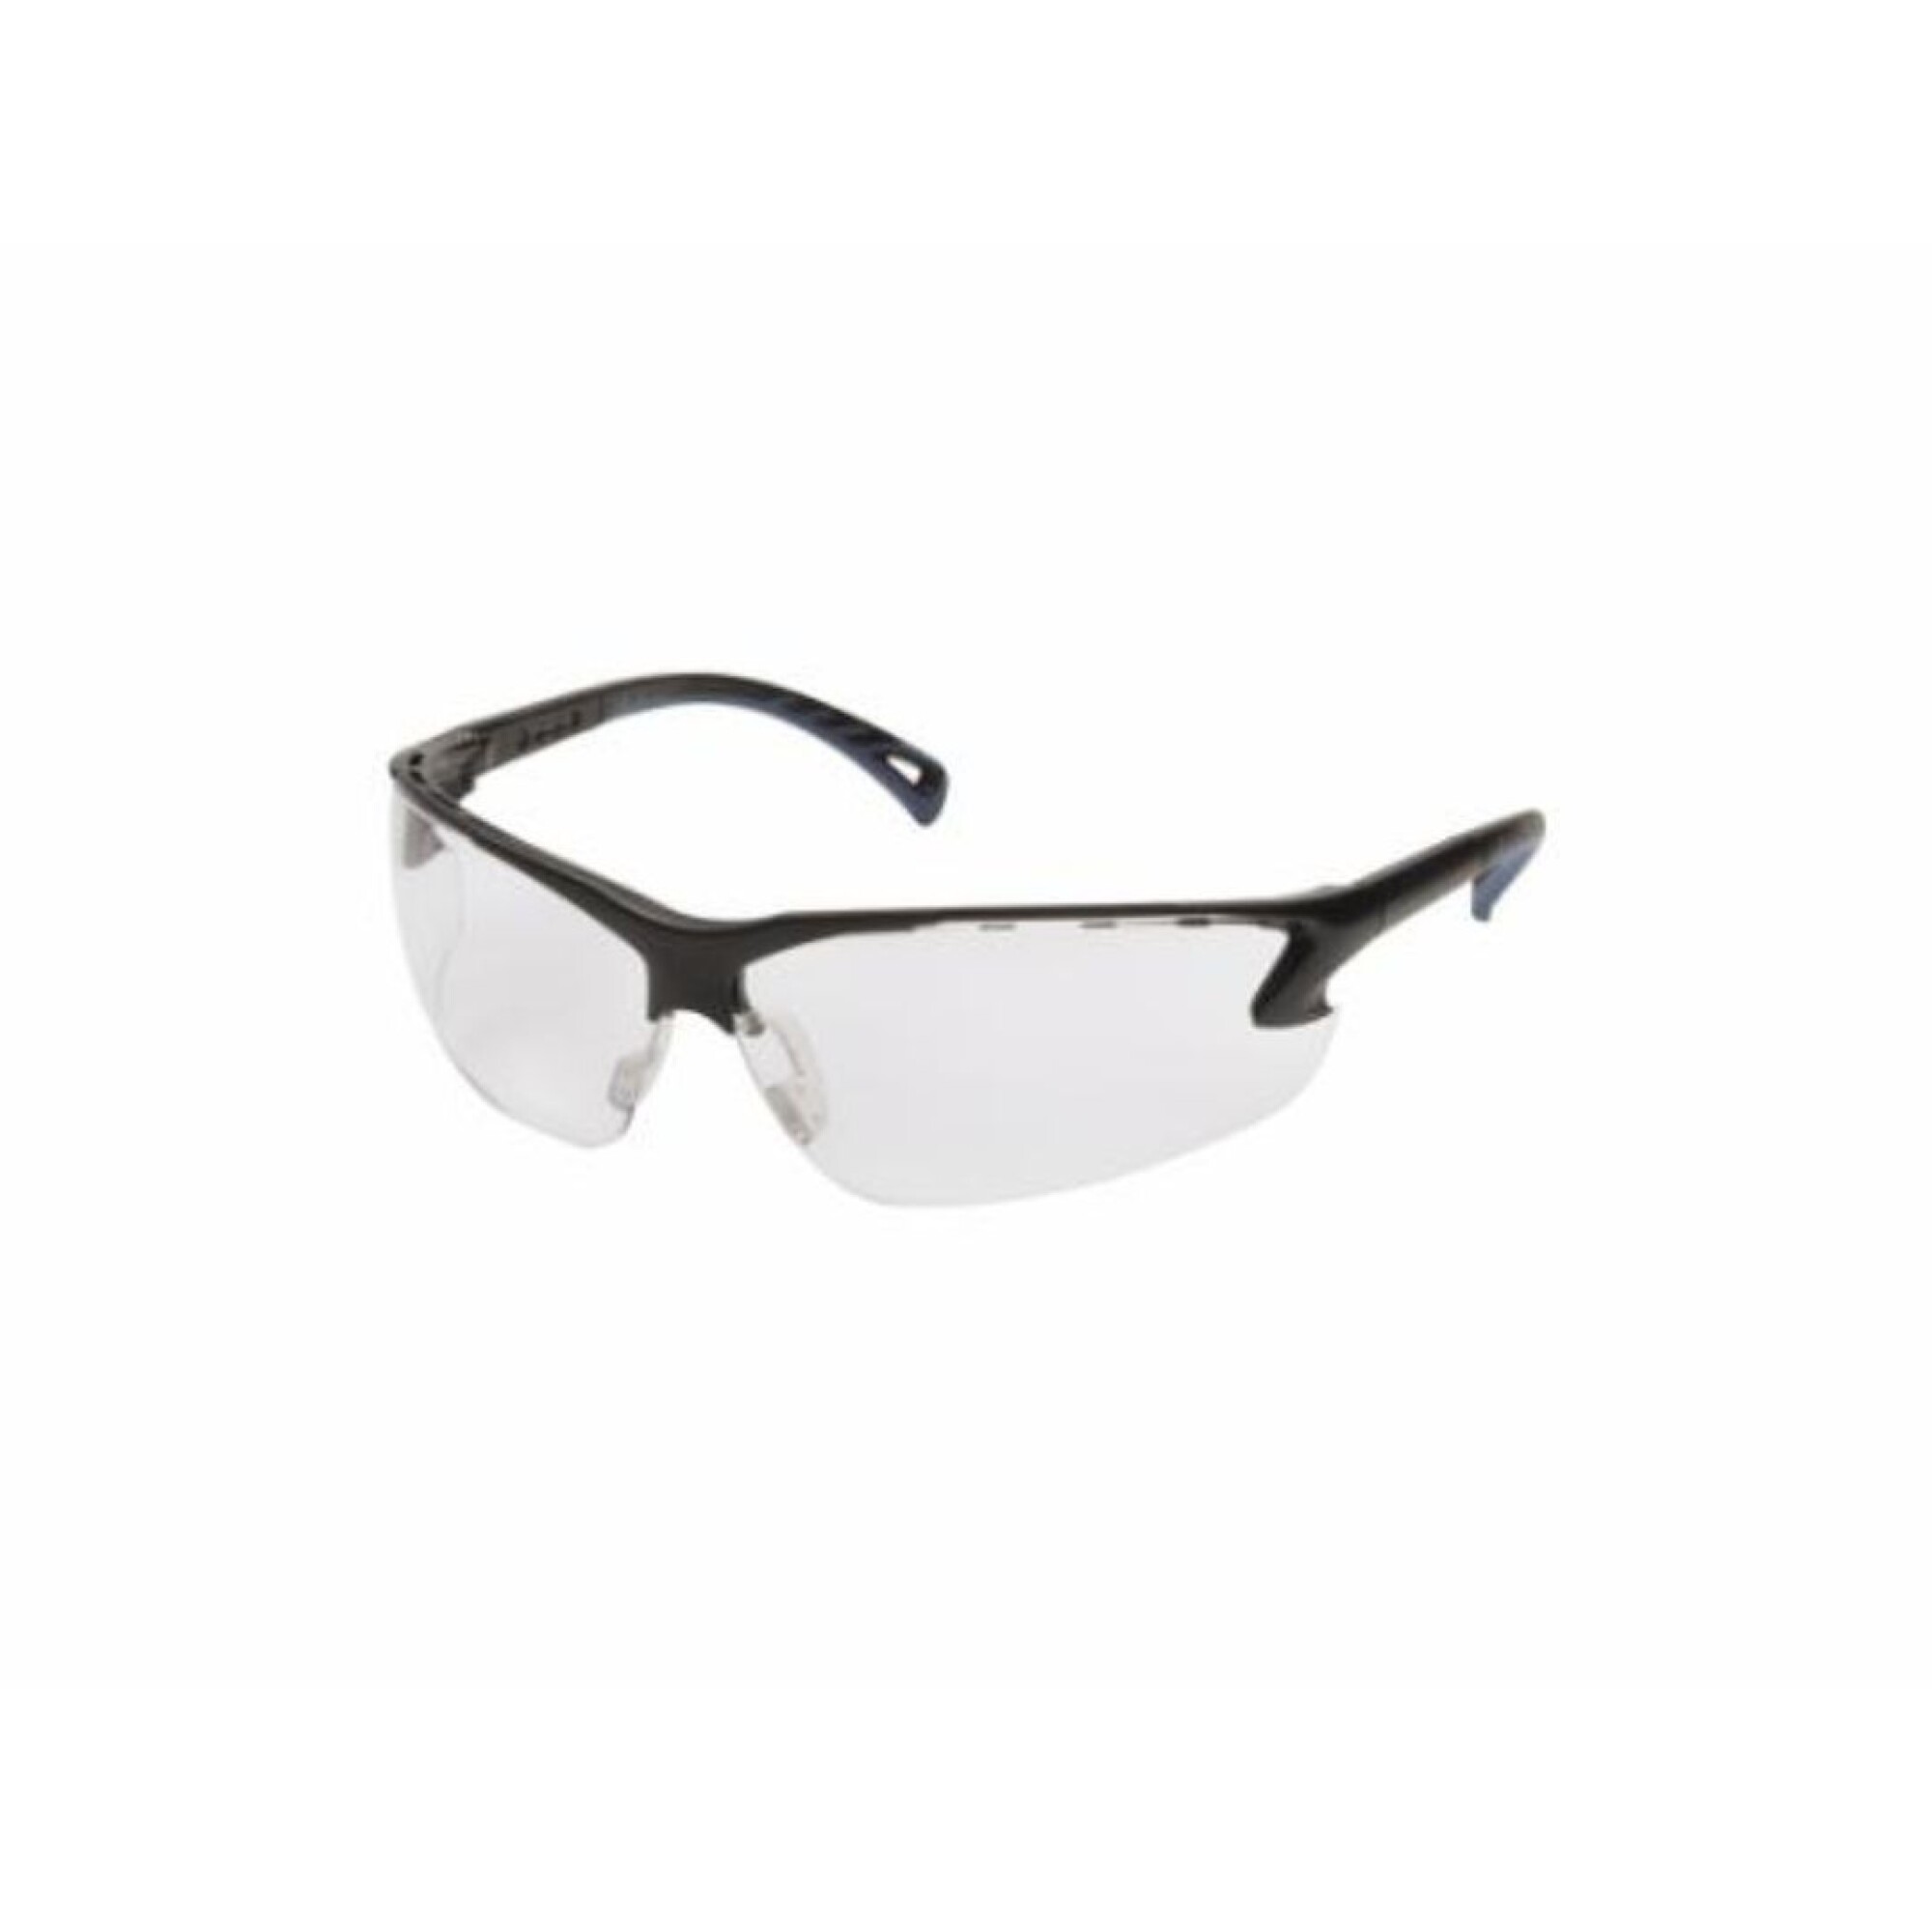 https://f.fcdn.app/imgs/2dfd78/aventureros.com.uy/avenuy/ba41/original/catalogo/17006_17006_1/2000-2000/gafas-protectoras-con-patillas-ajustables-transparentes-gafas-protectoras-con-patillas-ajustables-transparentes.jpg